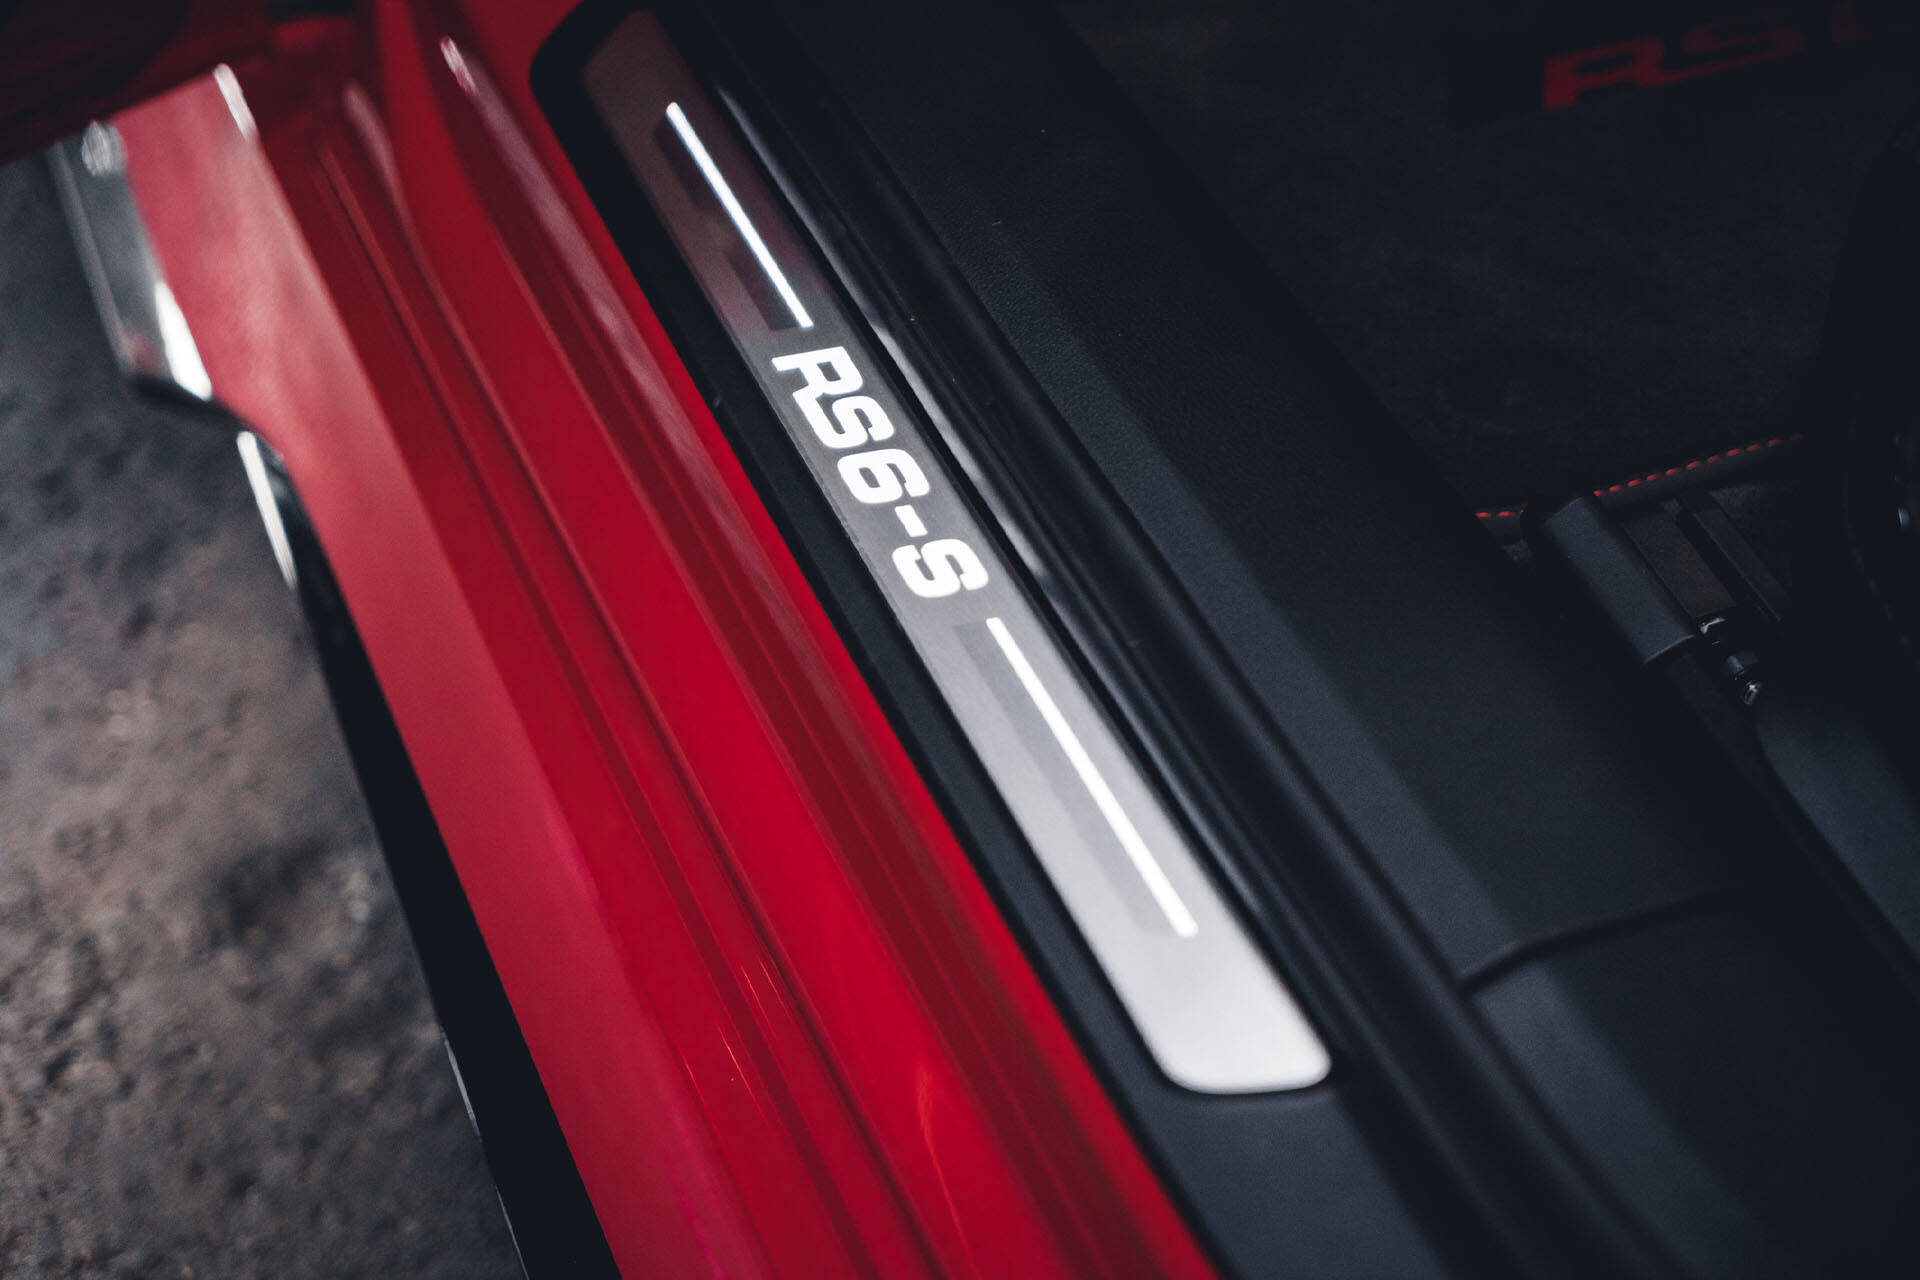 Tuning-Wahnsinn: Abt Audi RS6-E - News - AUTOWELT 